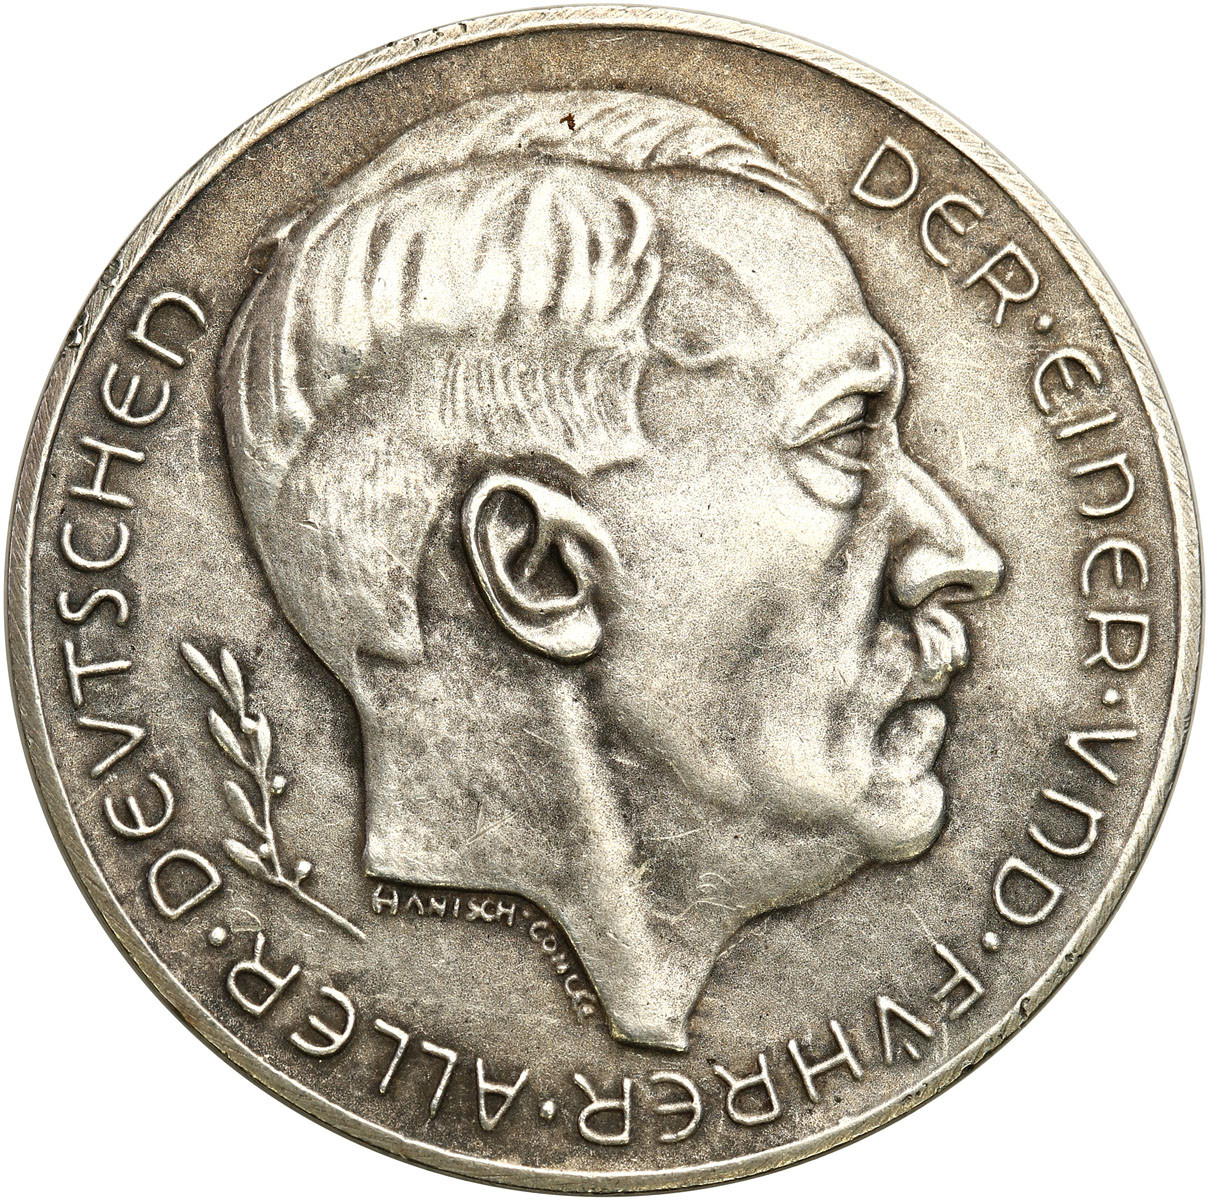 Niemcy, III Rzesza. Medal Adolf Hitler 1939, srebro